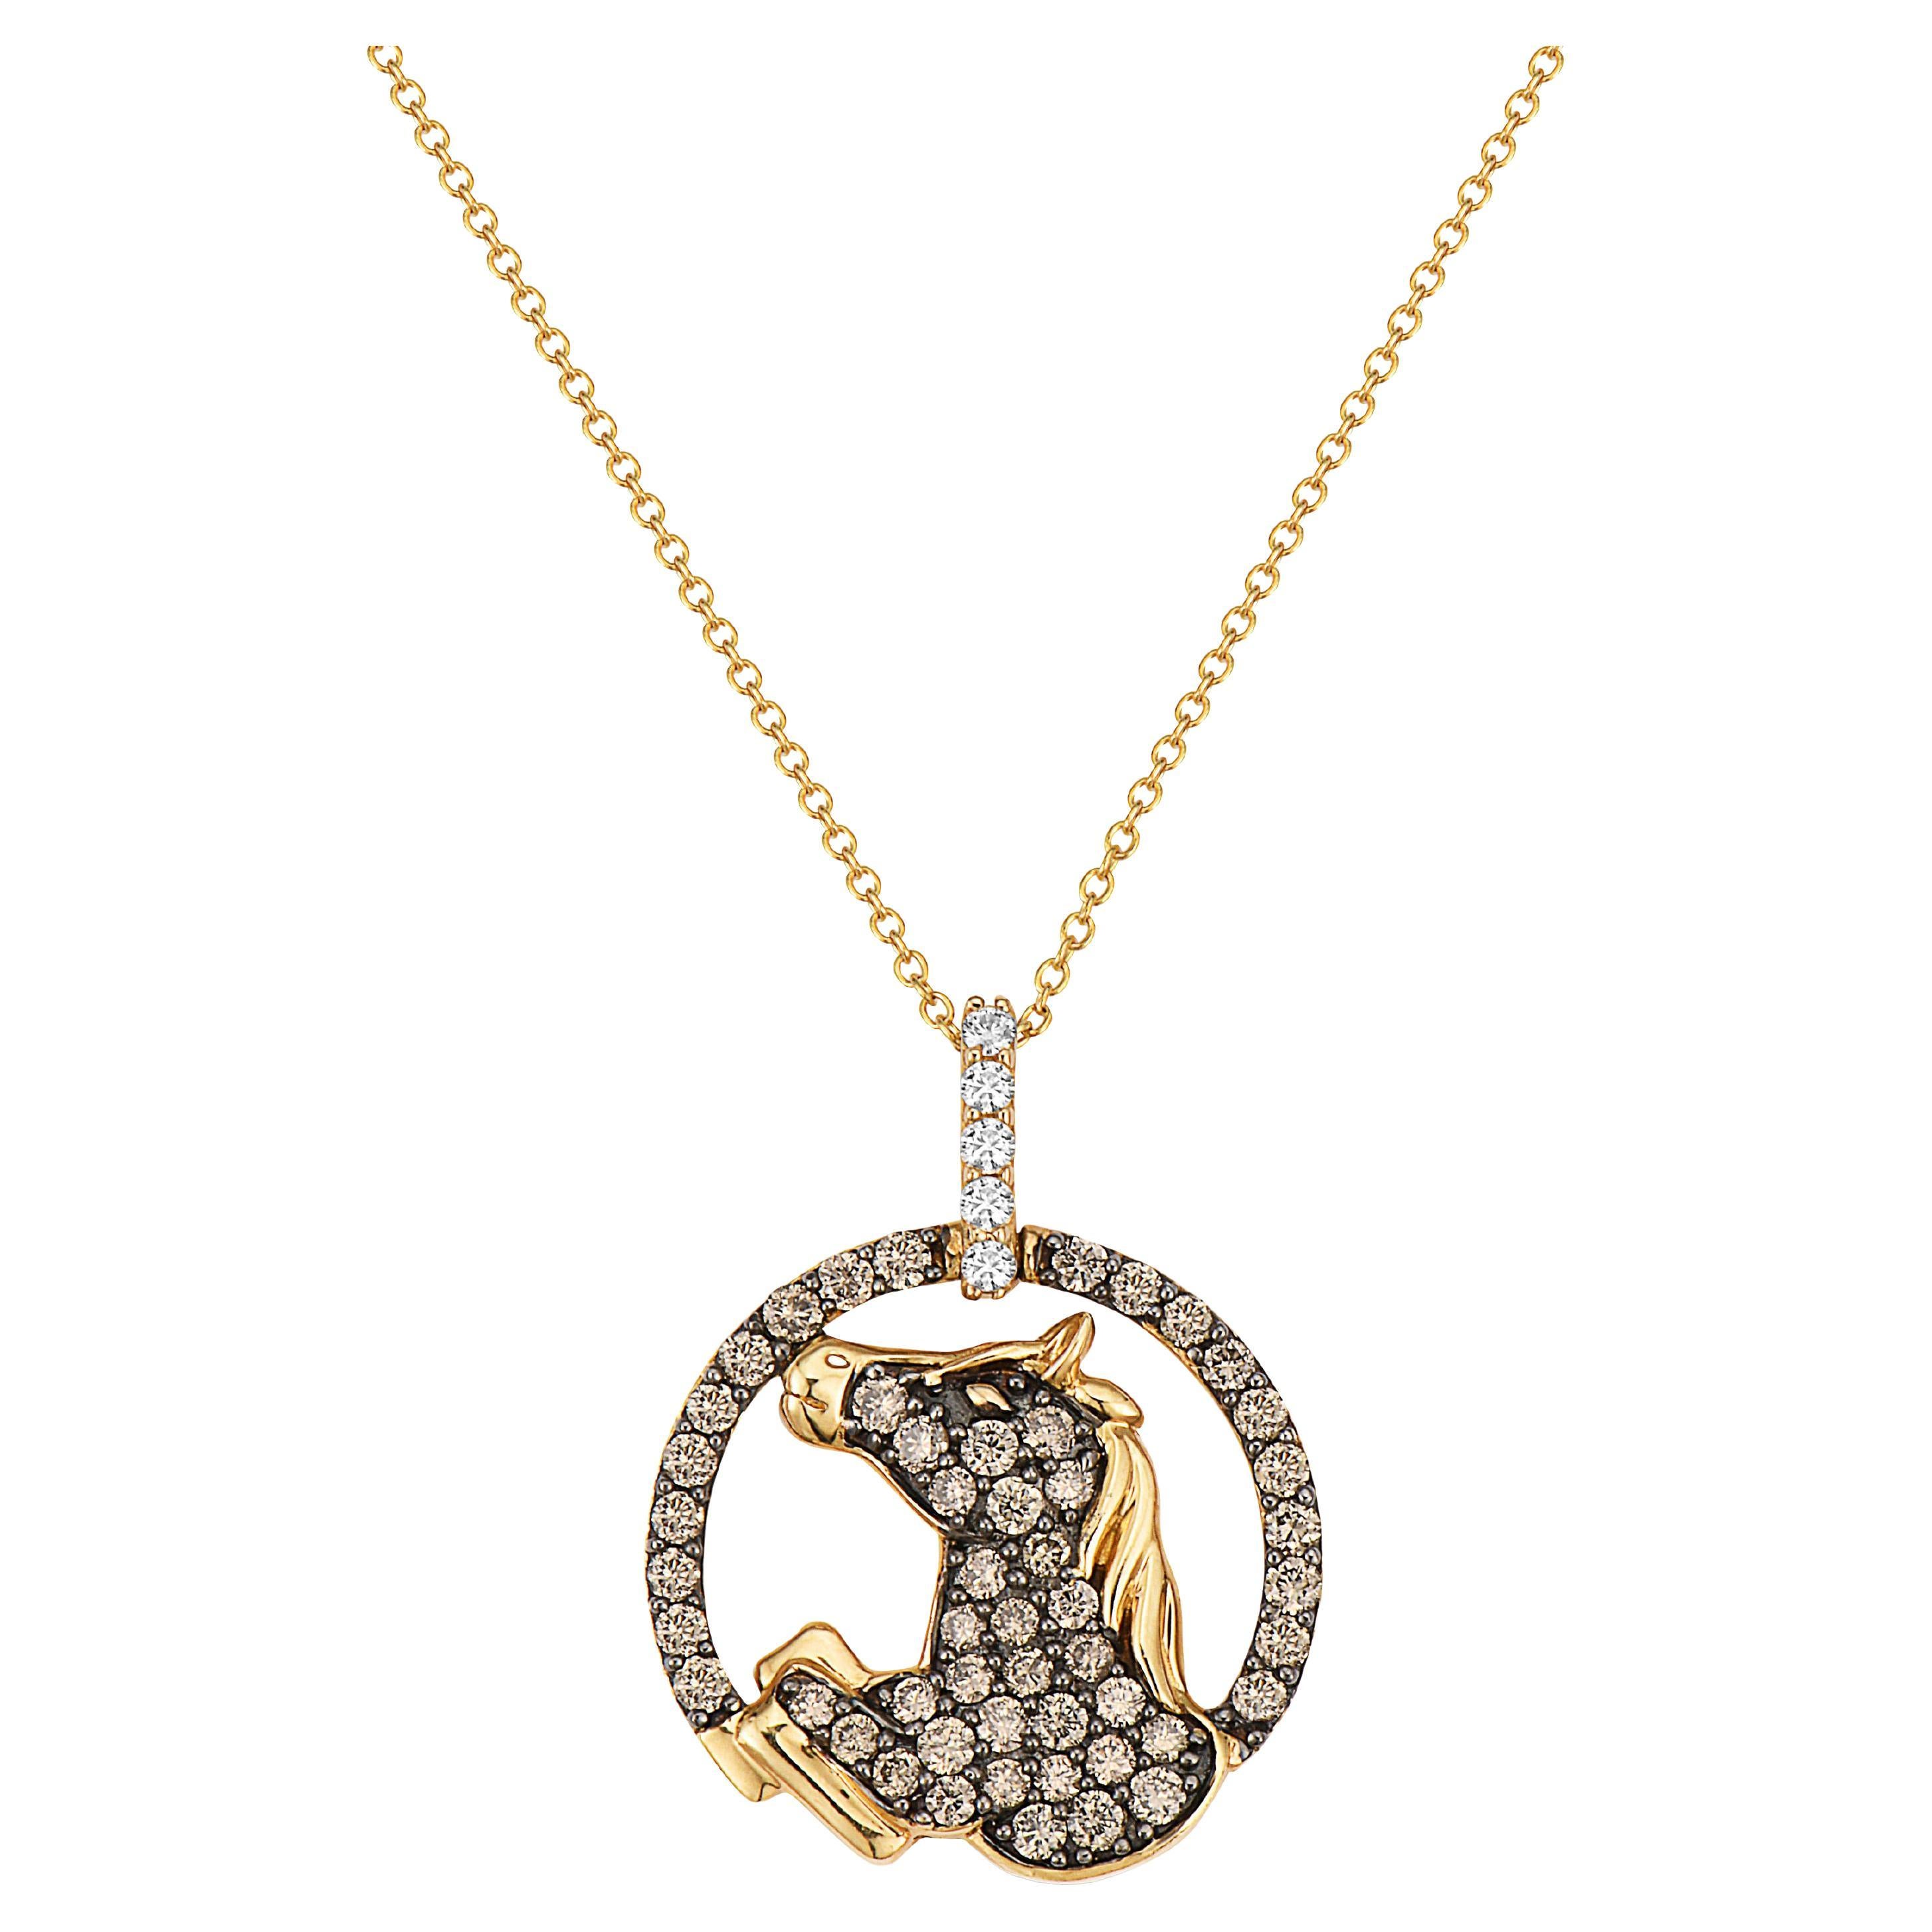 NEW / Levian fancy Pearl & Chocolate diamond necklace / 14K gold | eBay